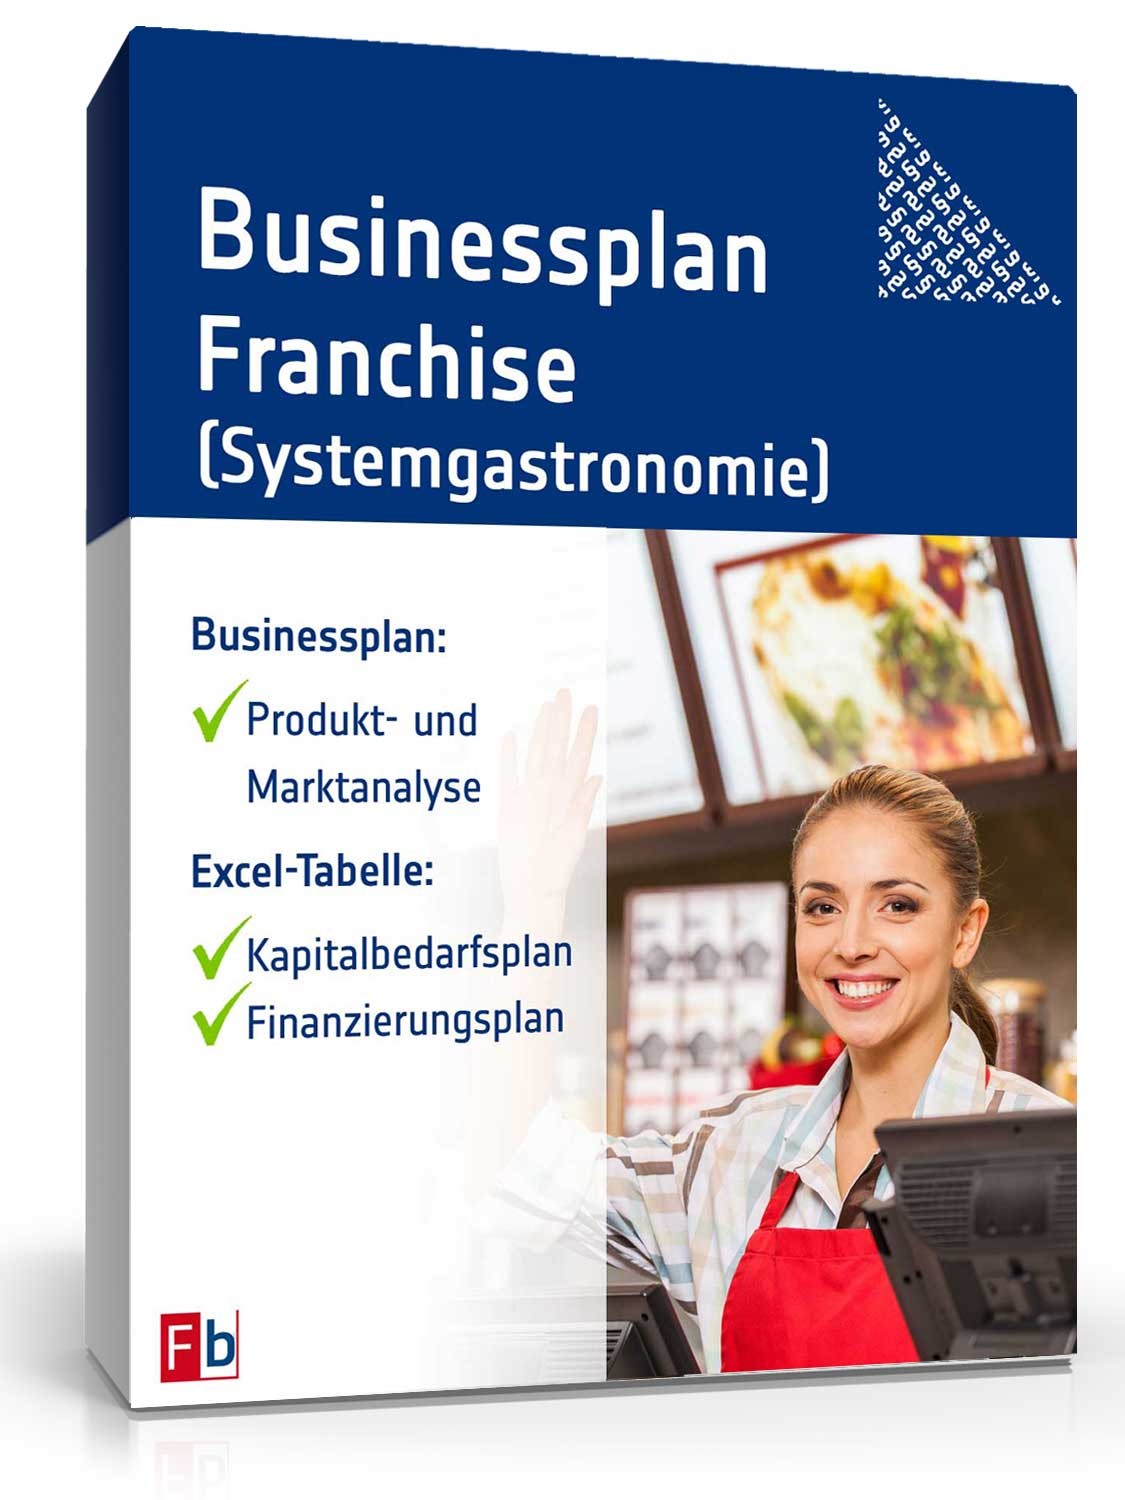 Hauptbild des Produkts: Businessplan Franchise (Systemgastronomie)